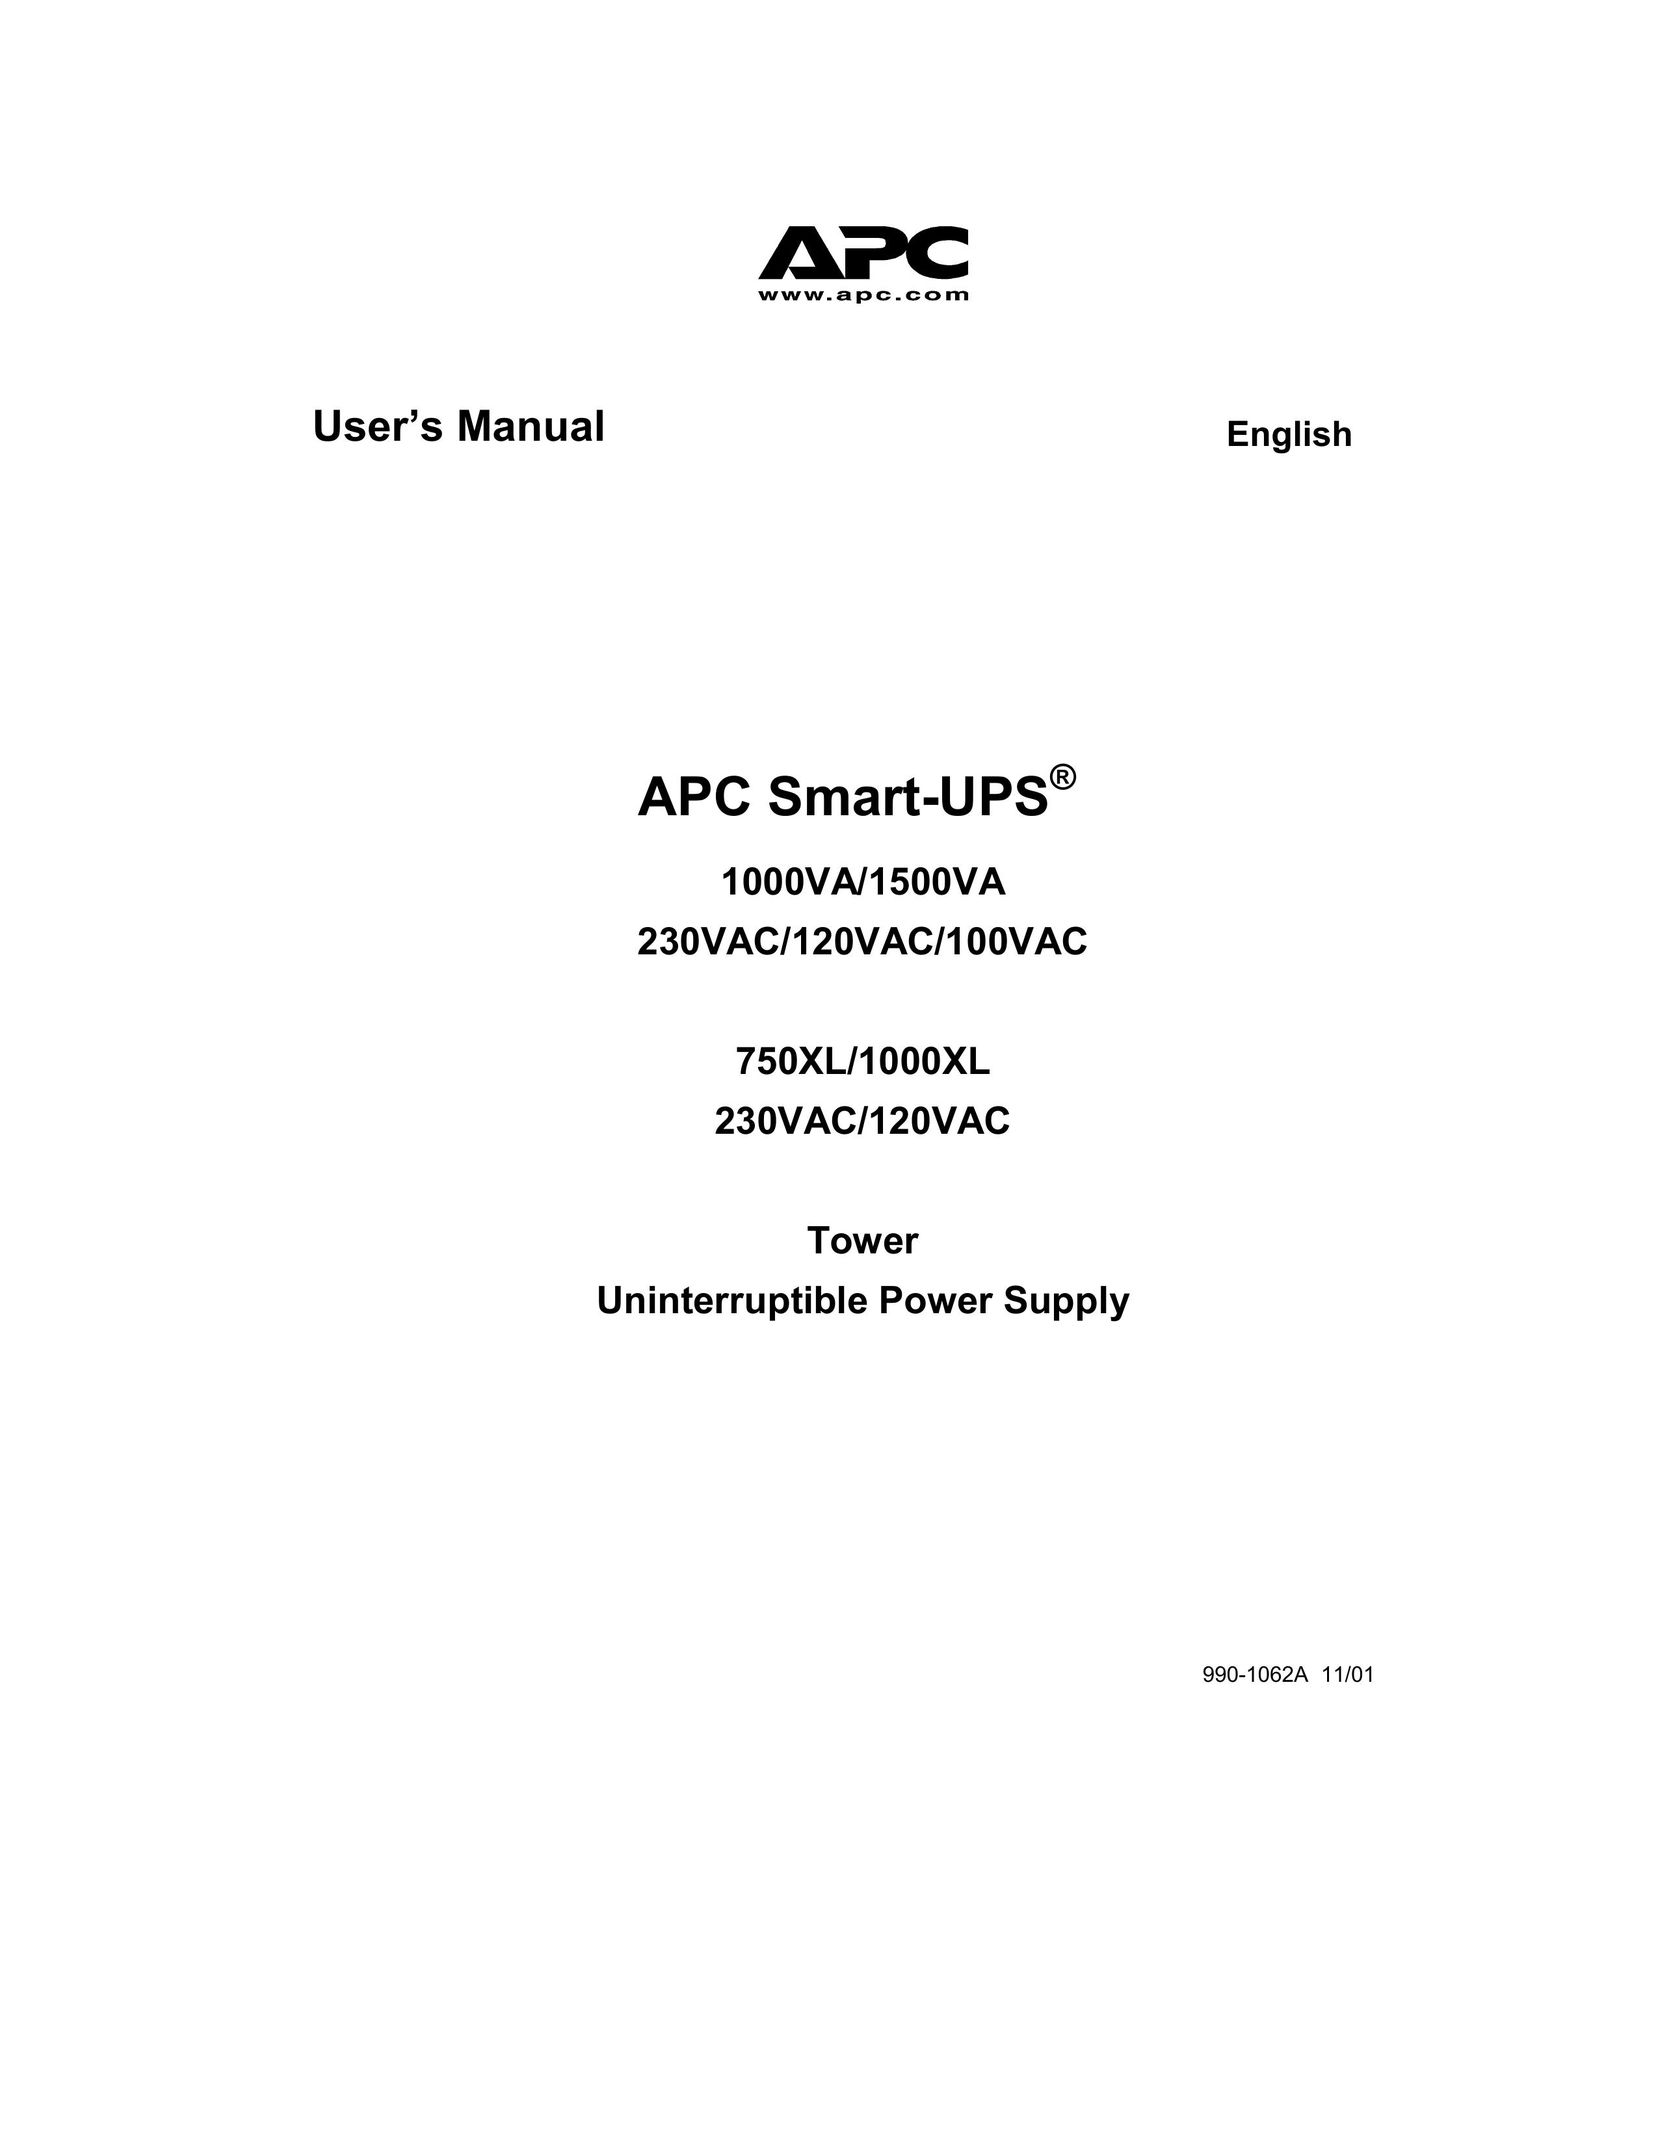 APC 1500VA Power Supply User Manual